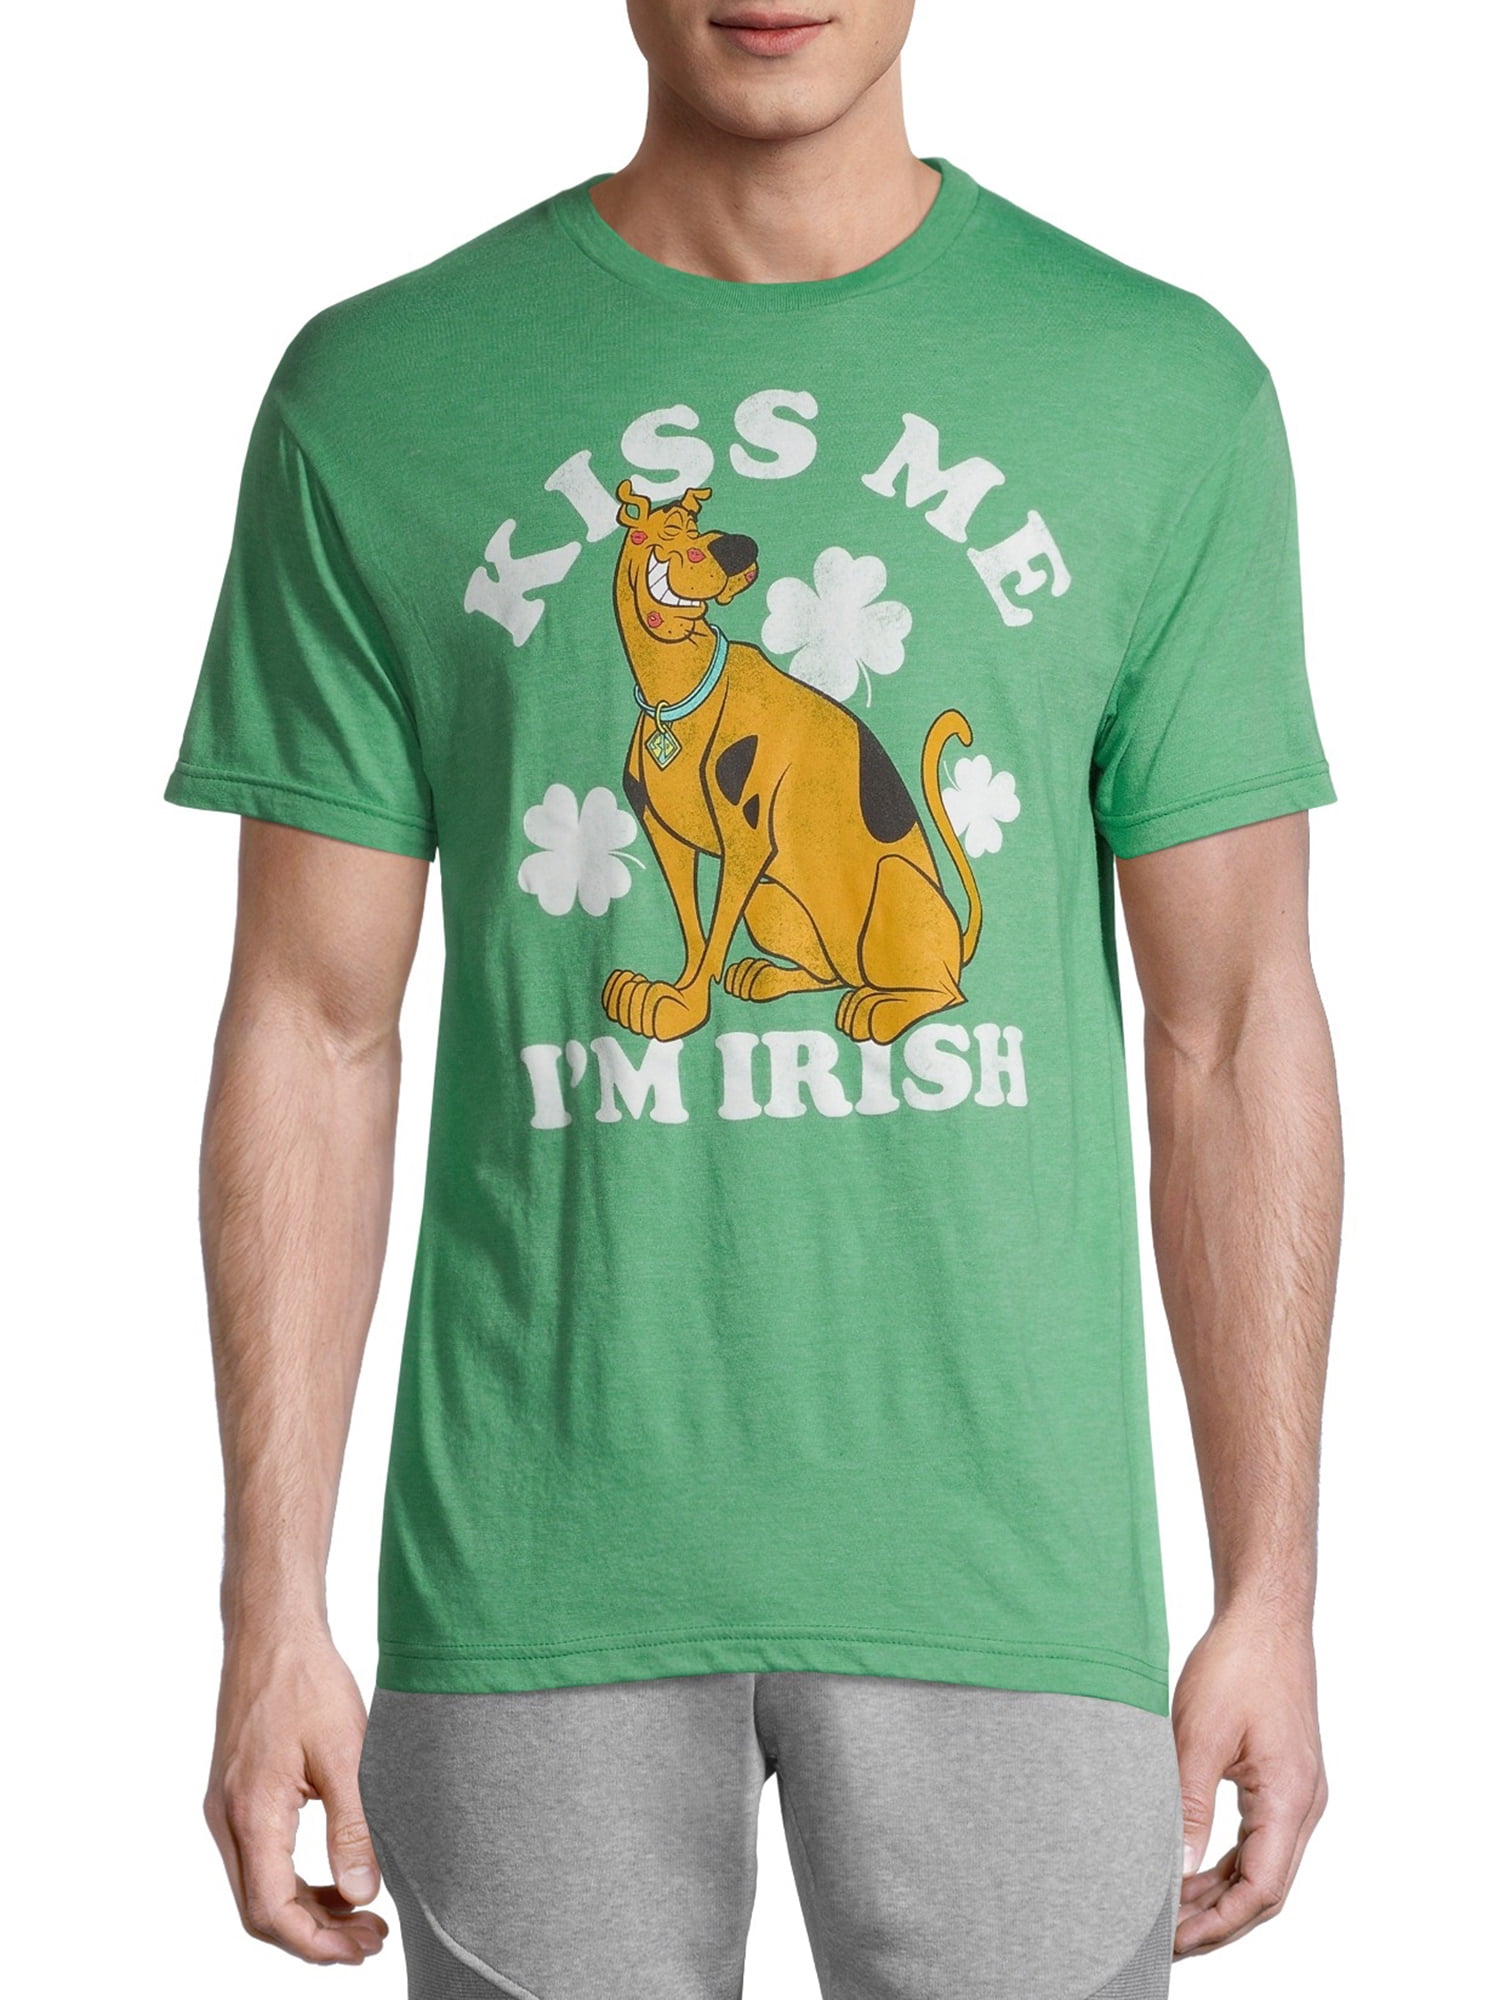 Bang Tidy Clothing St Patricks Day Vest Top Funny Irish Tops for Men Ready to Shamrock